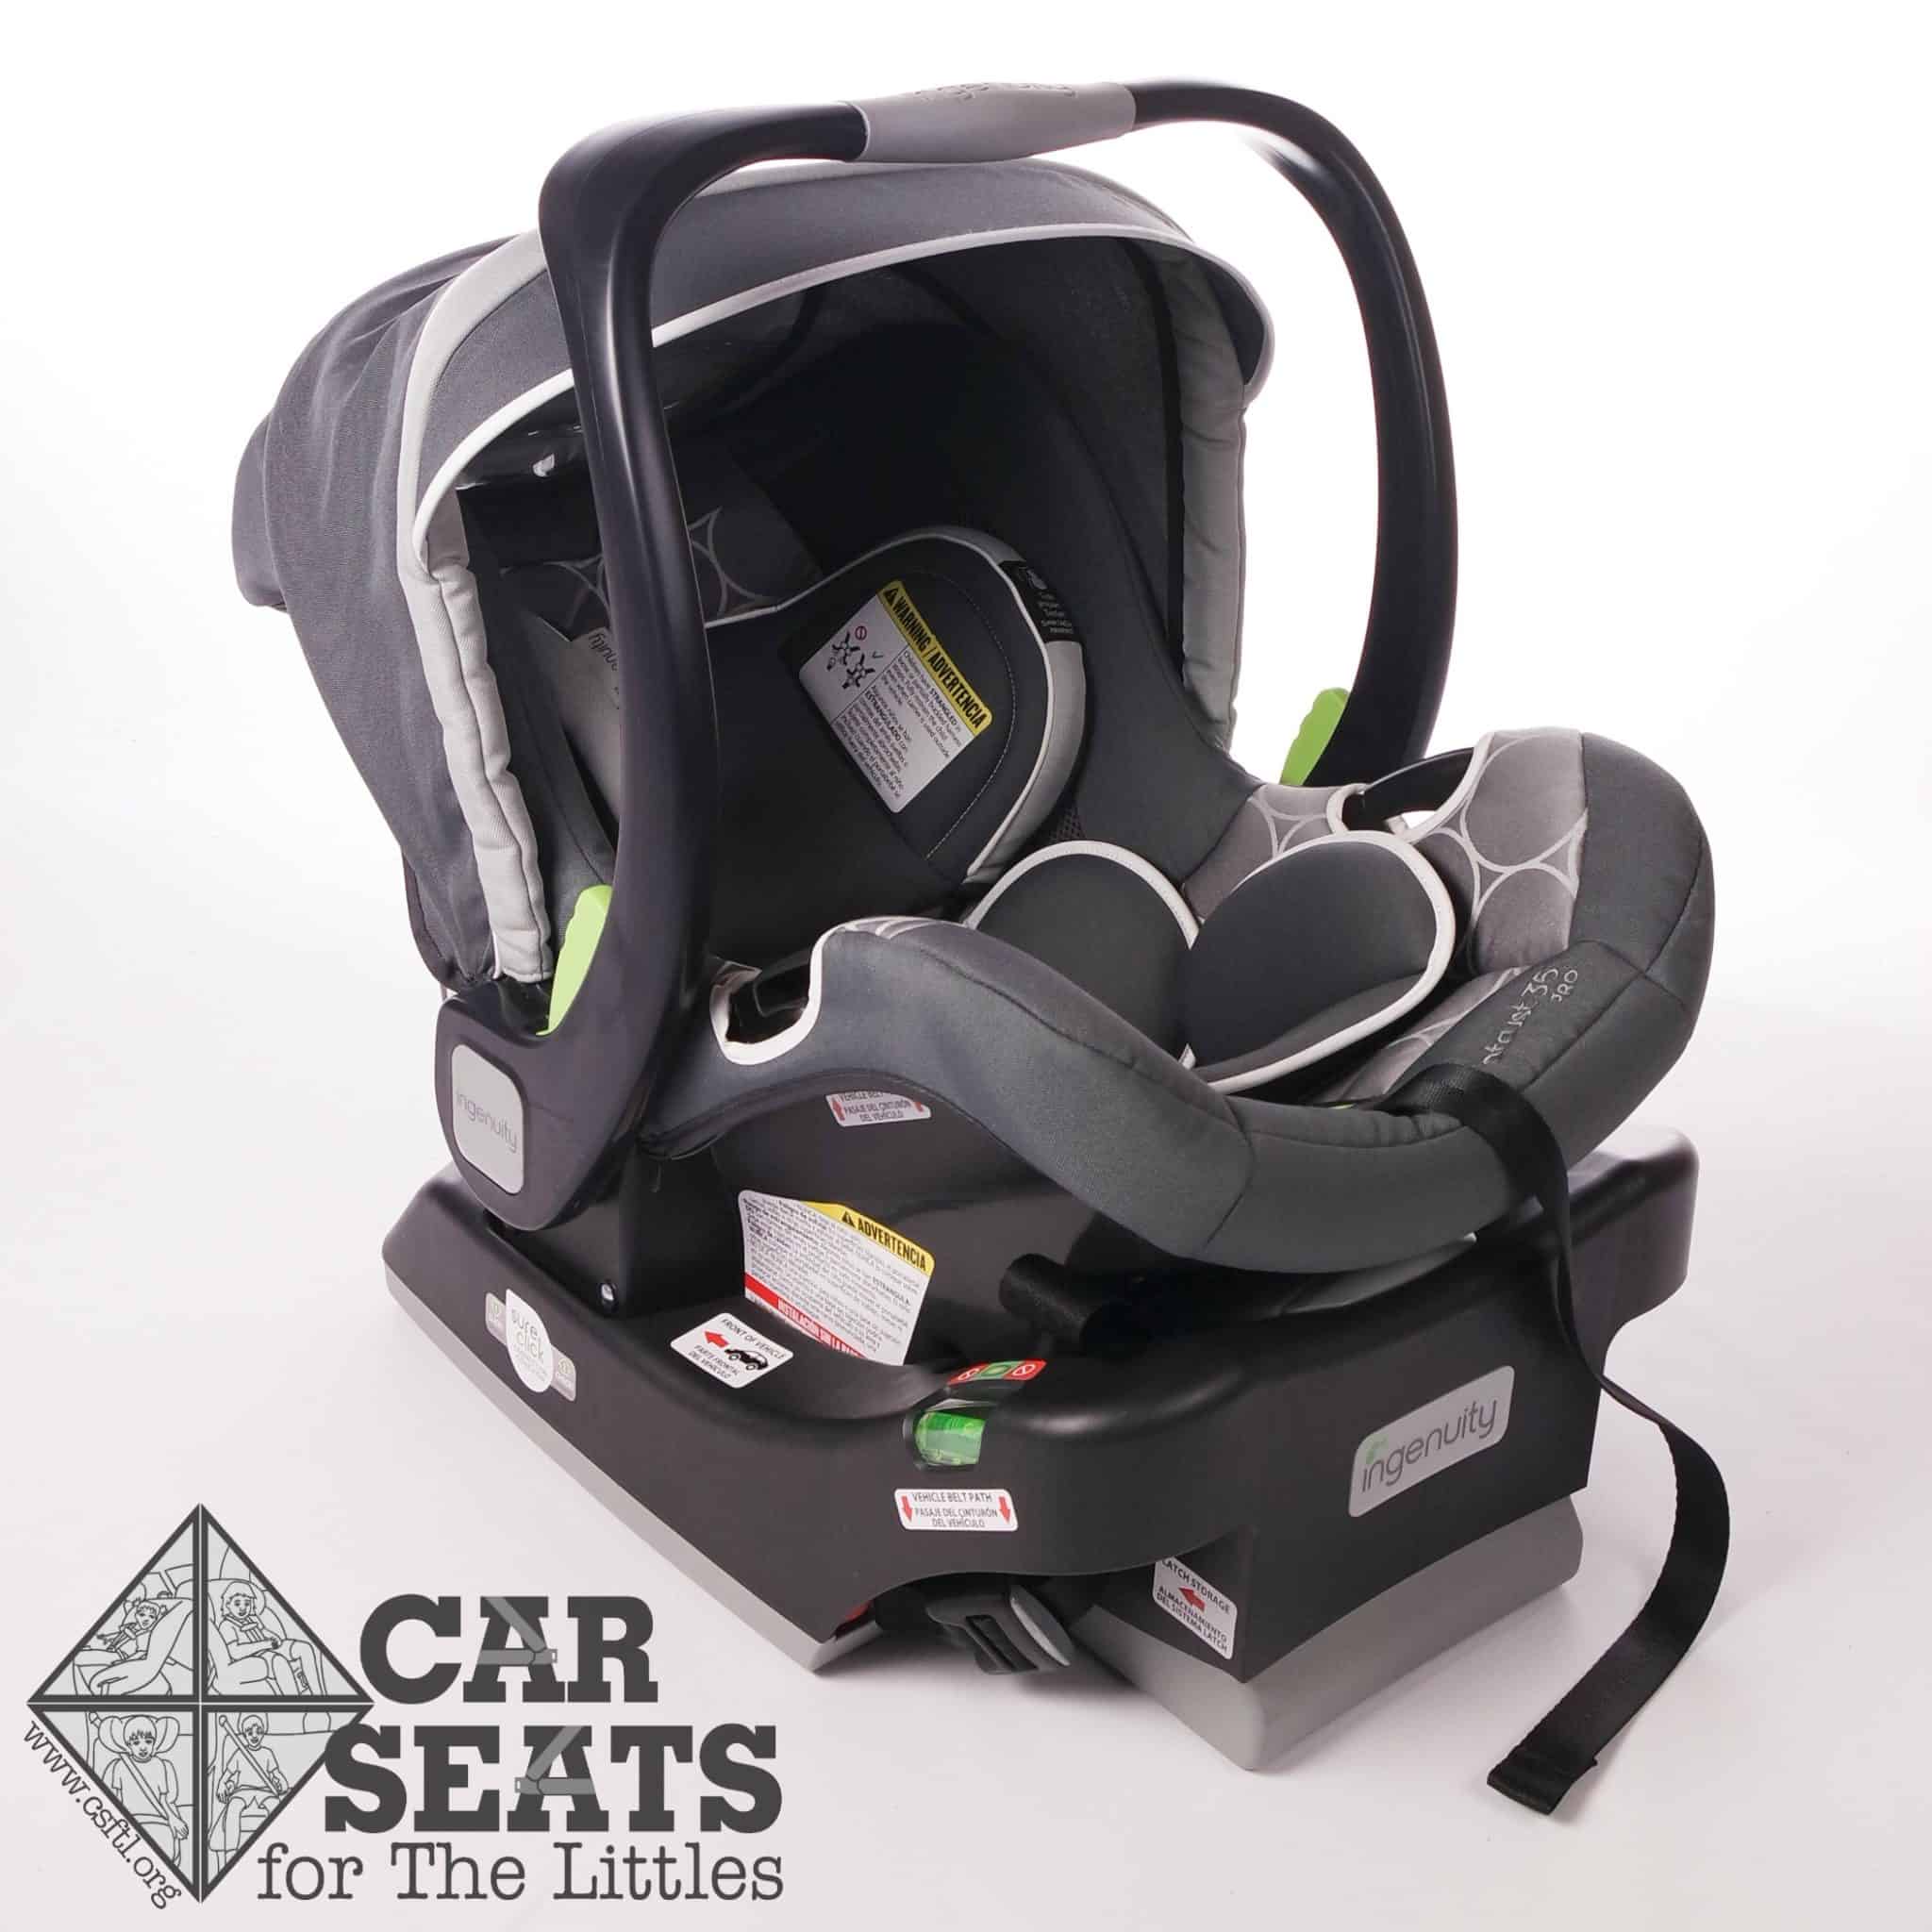 ingenuity baby seat